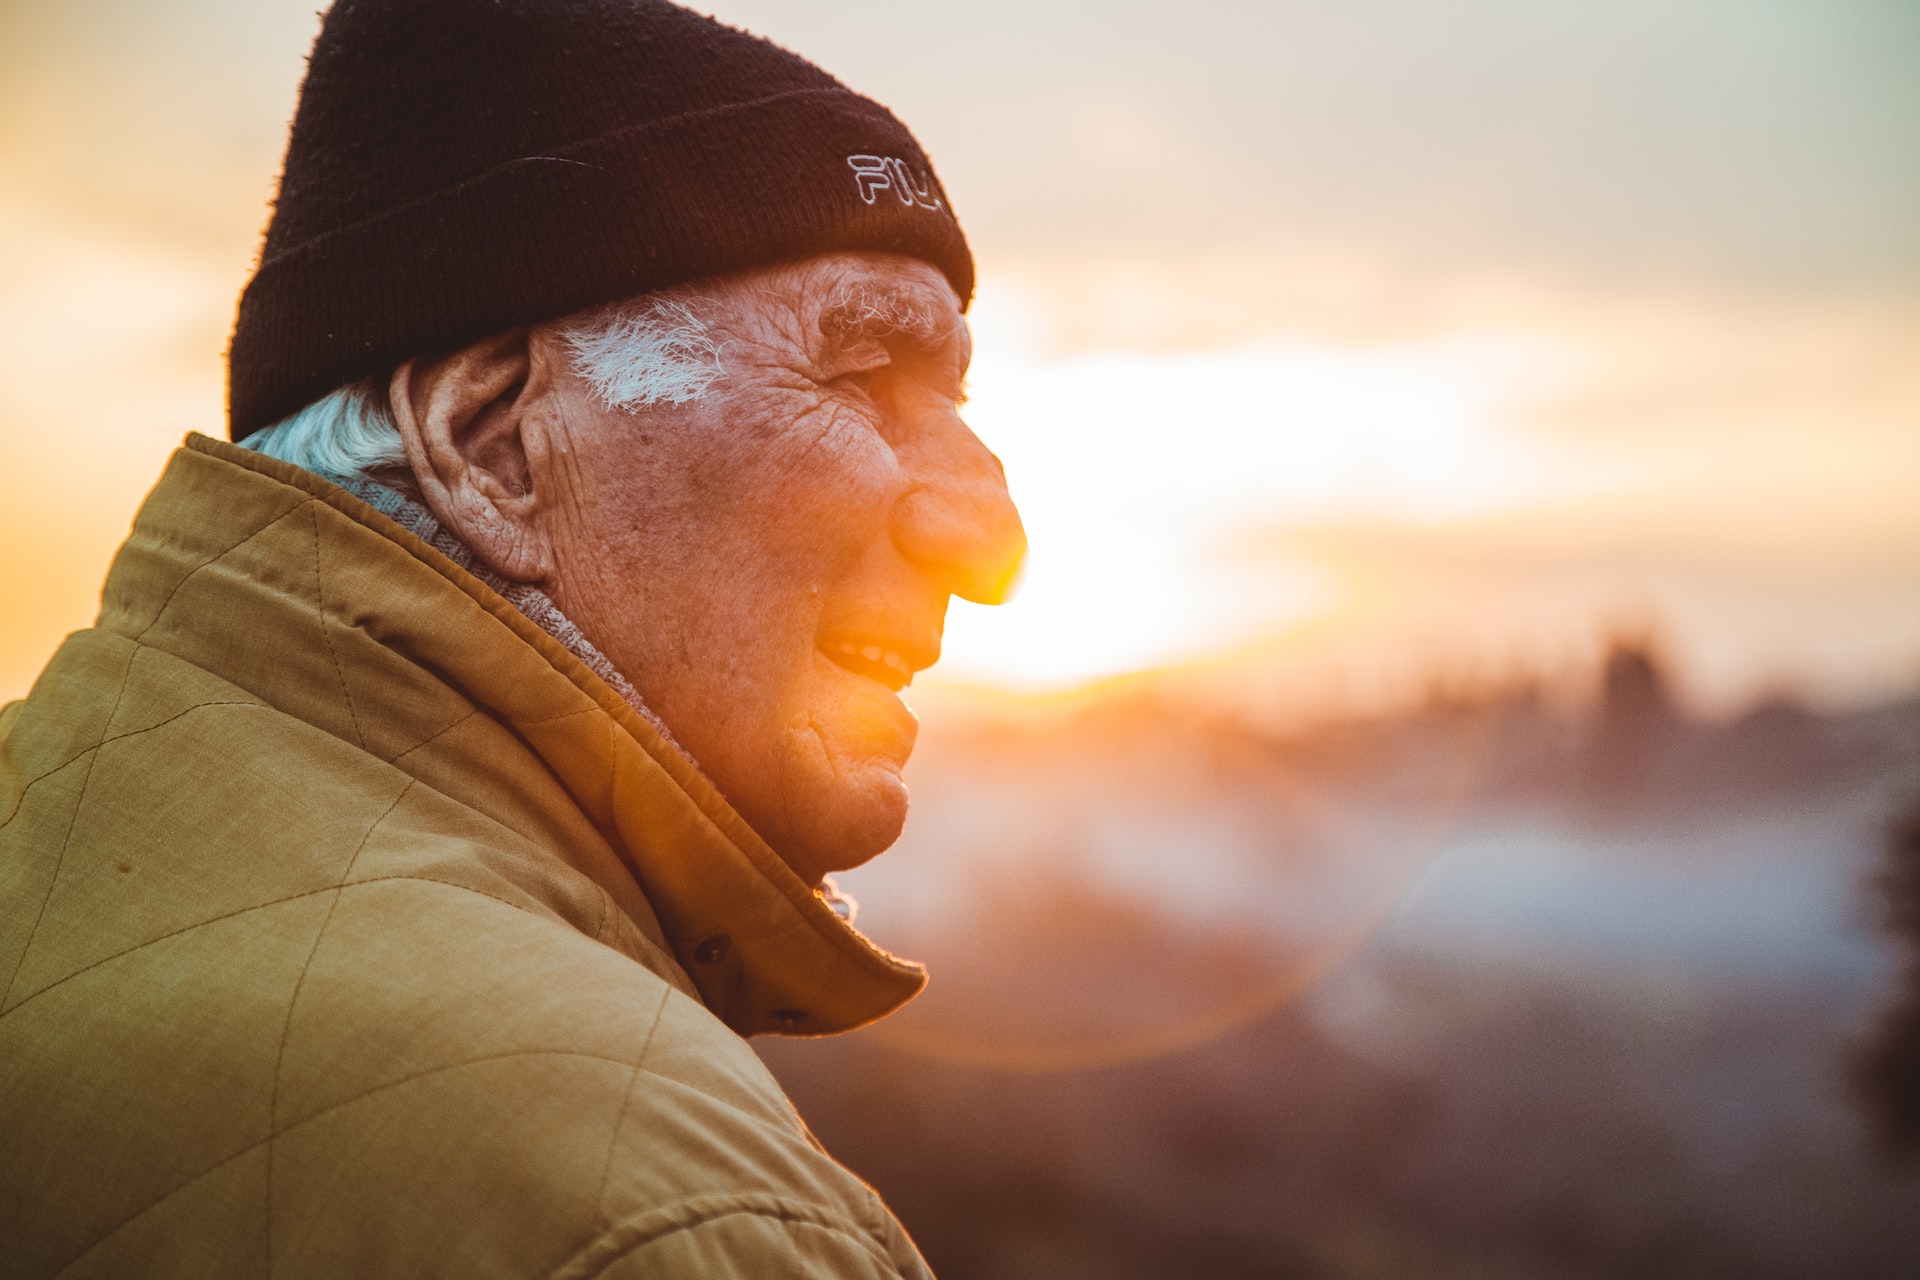 waterpik vs flossing - older man watching sunset